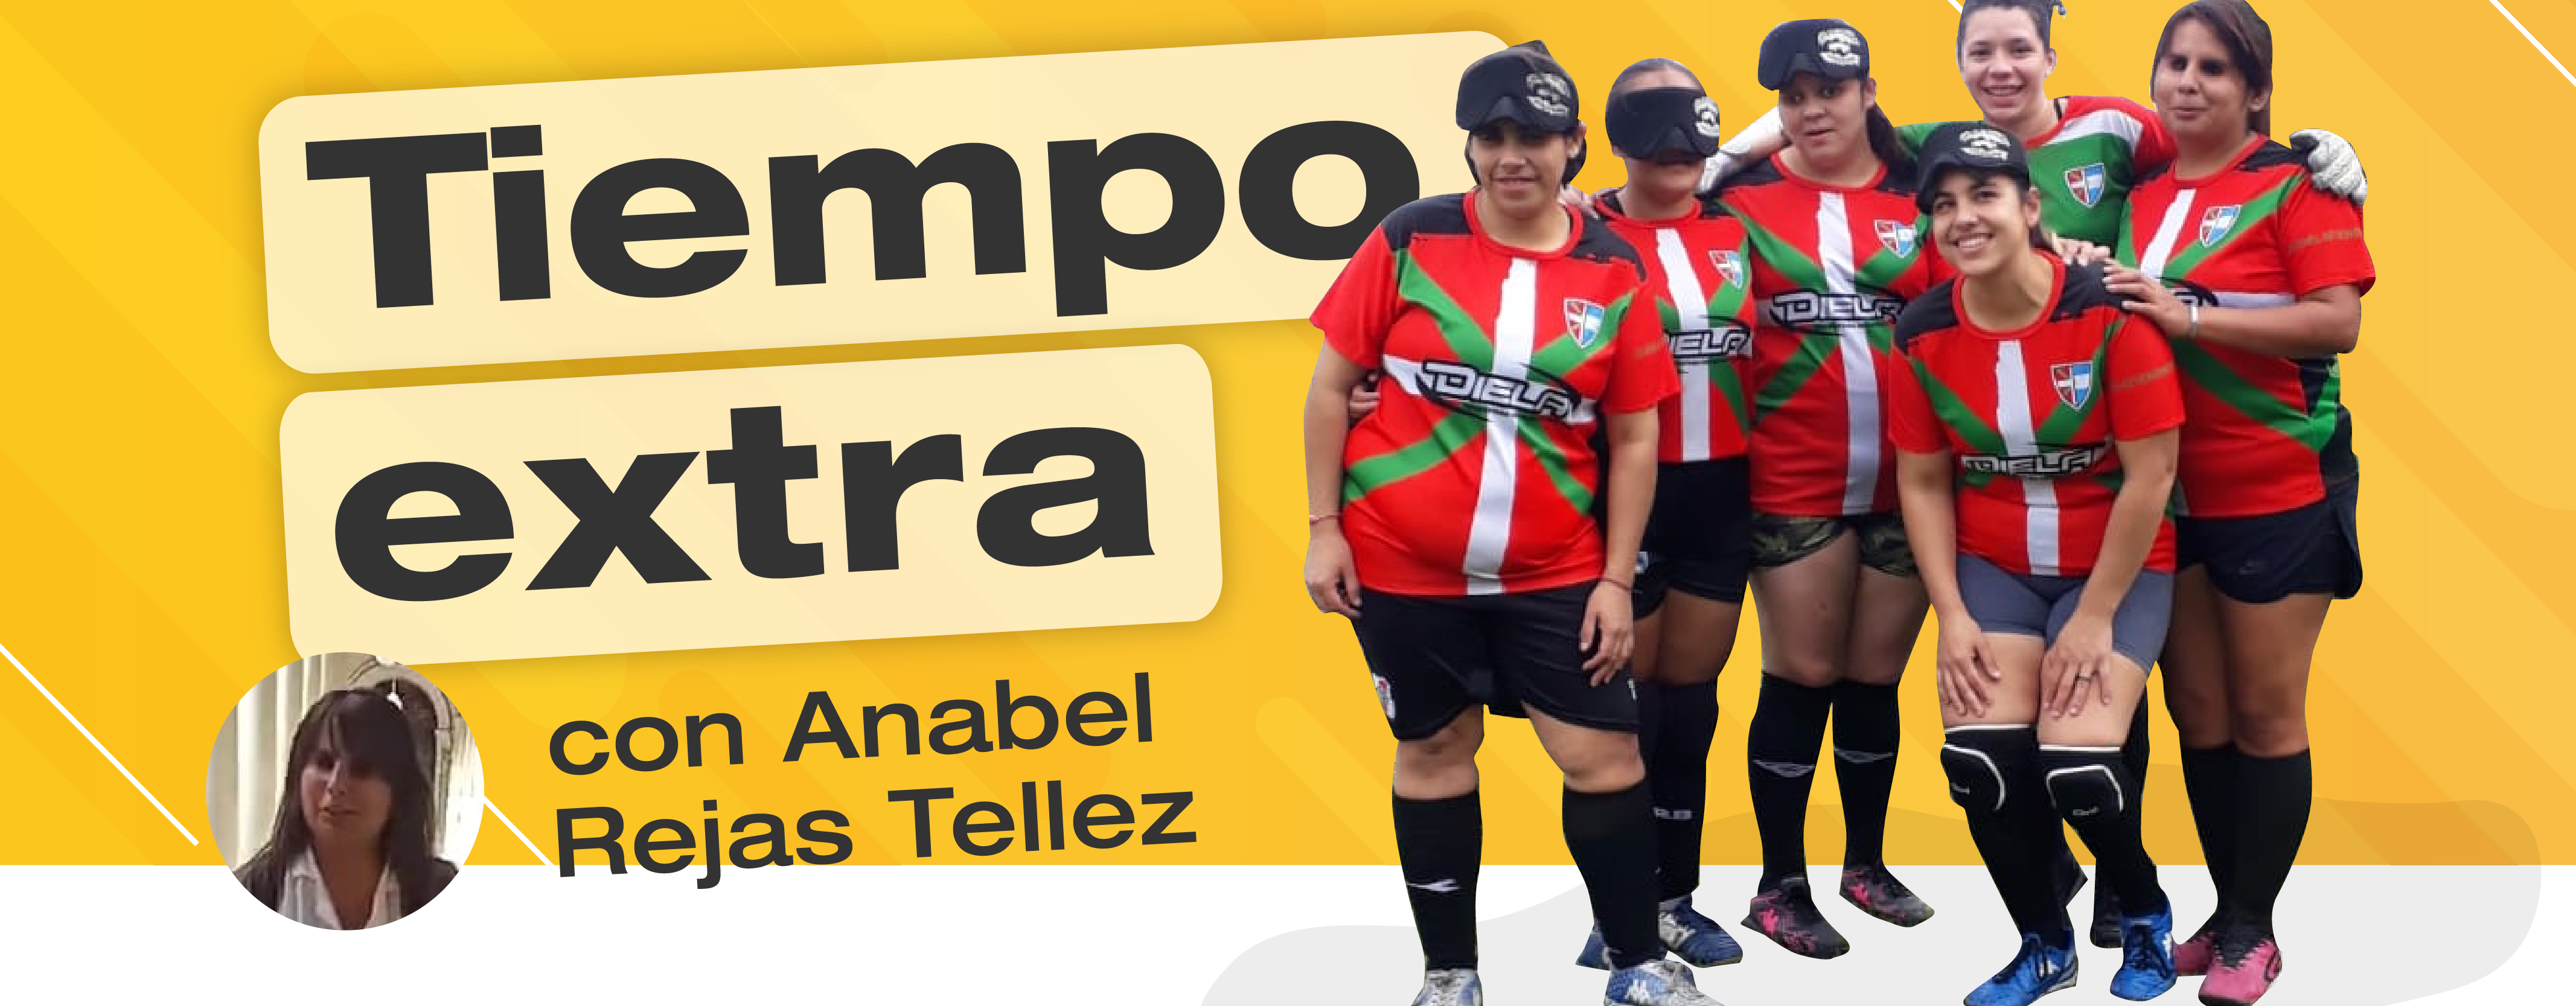 #TiempoExtra: Fútbol para personas ciegas